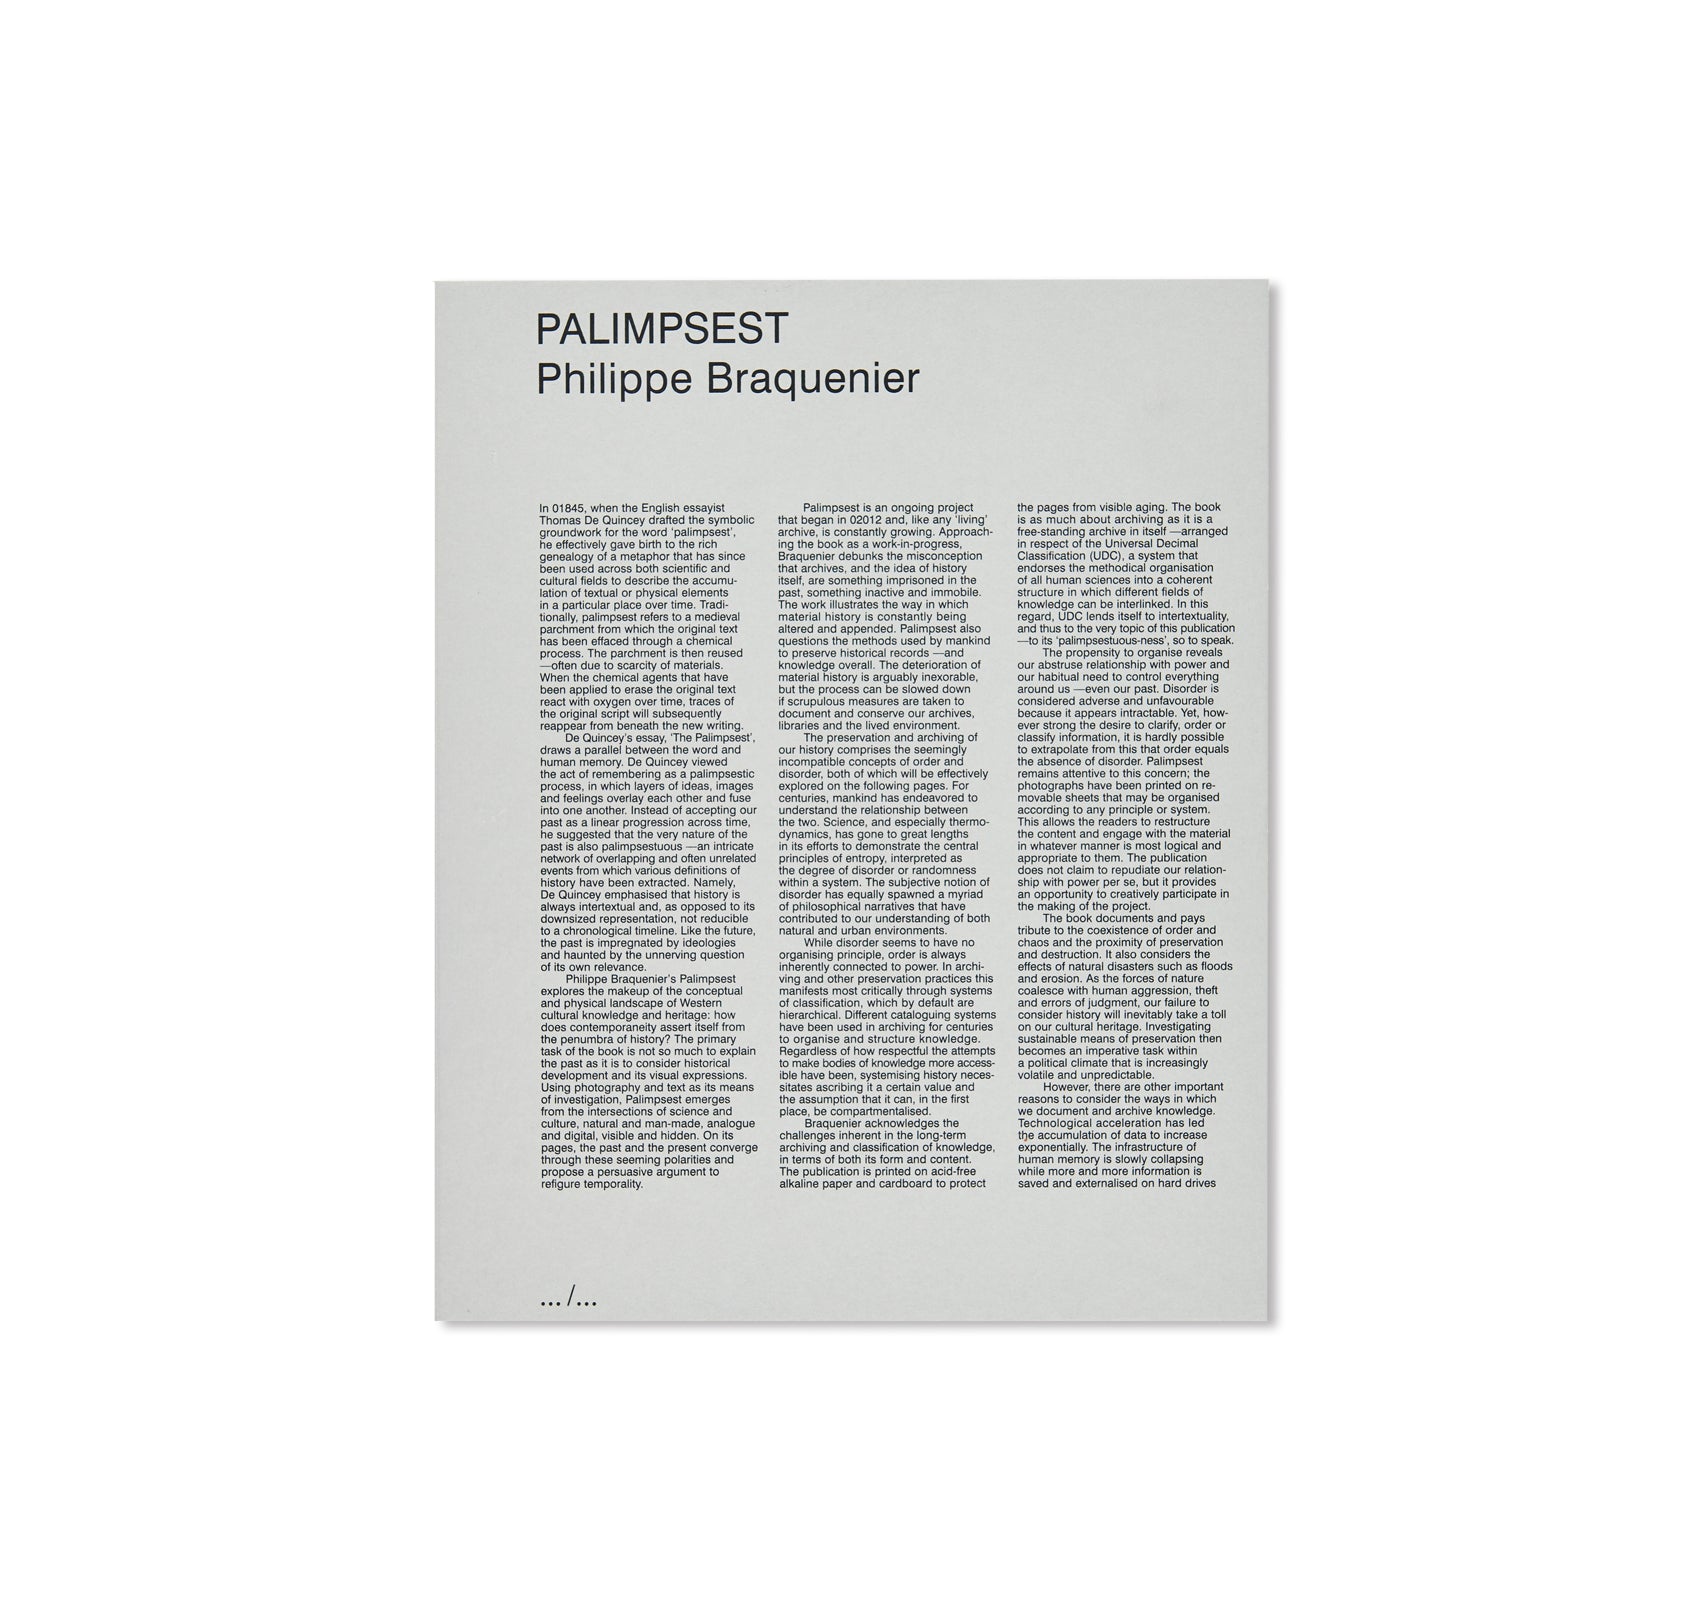 PALIMPSEST by Philippe Braquenier